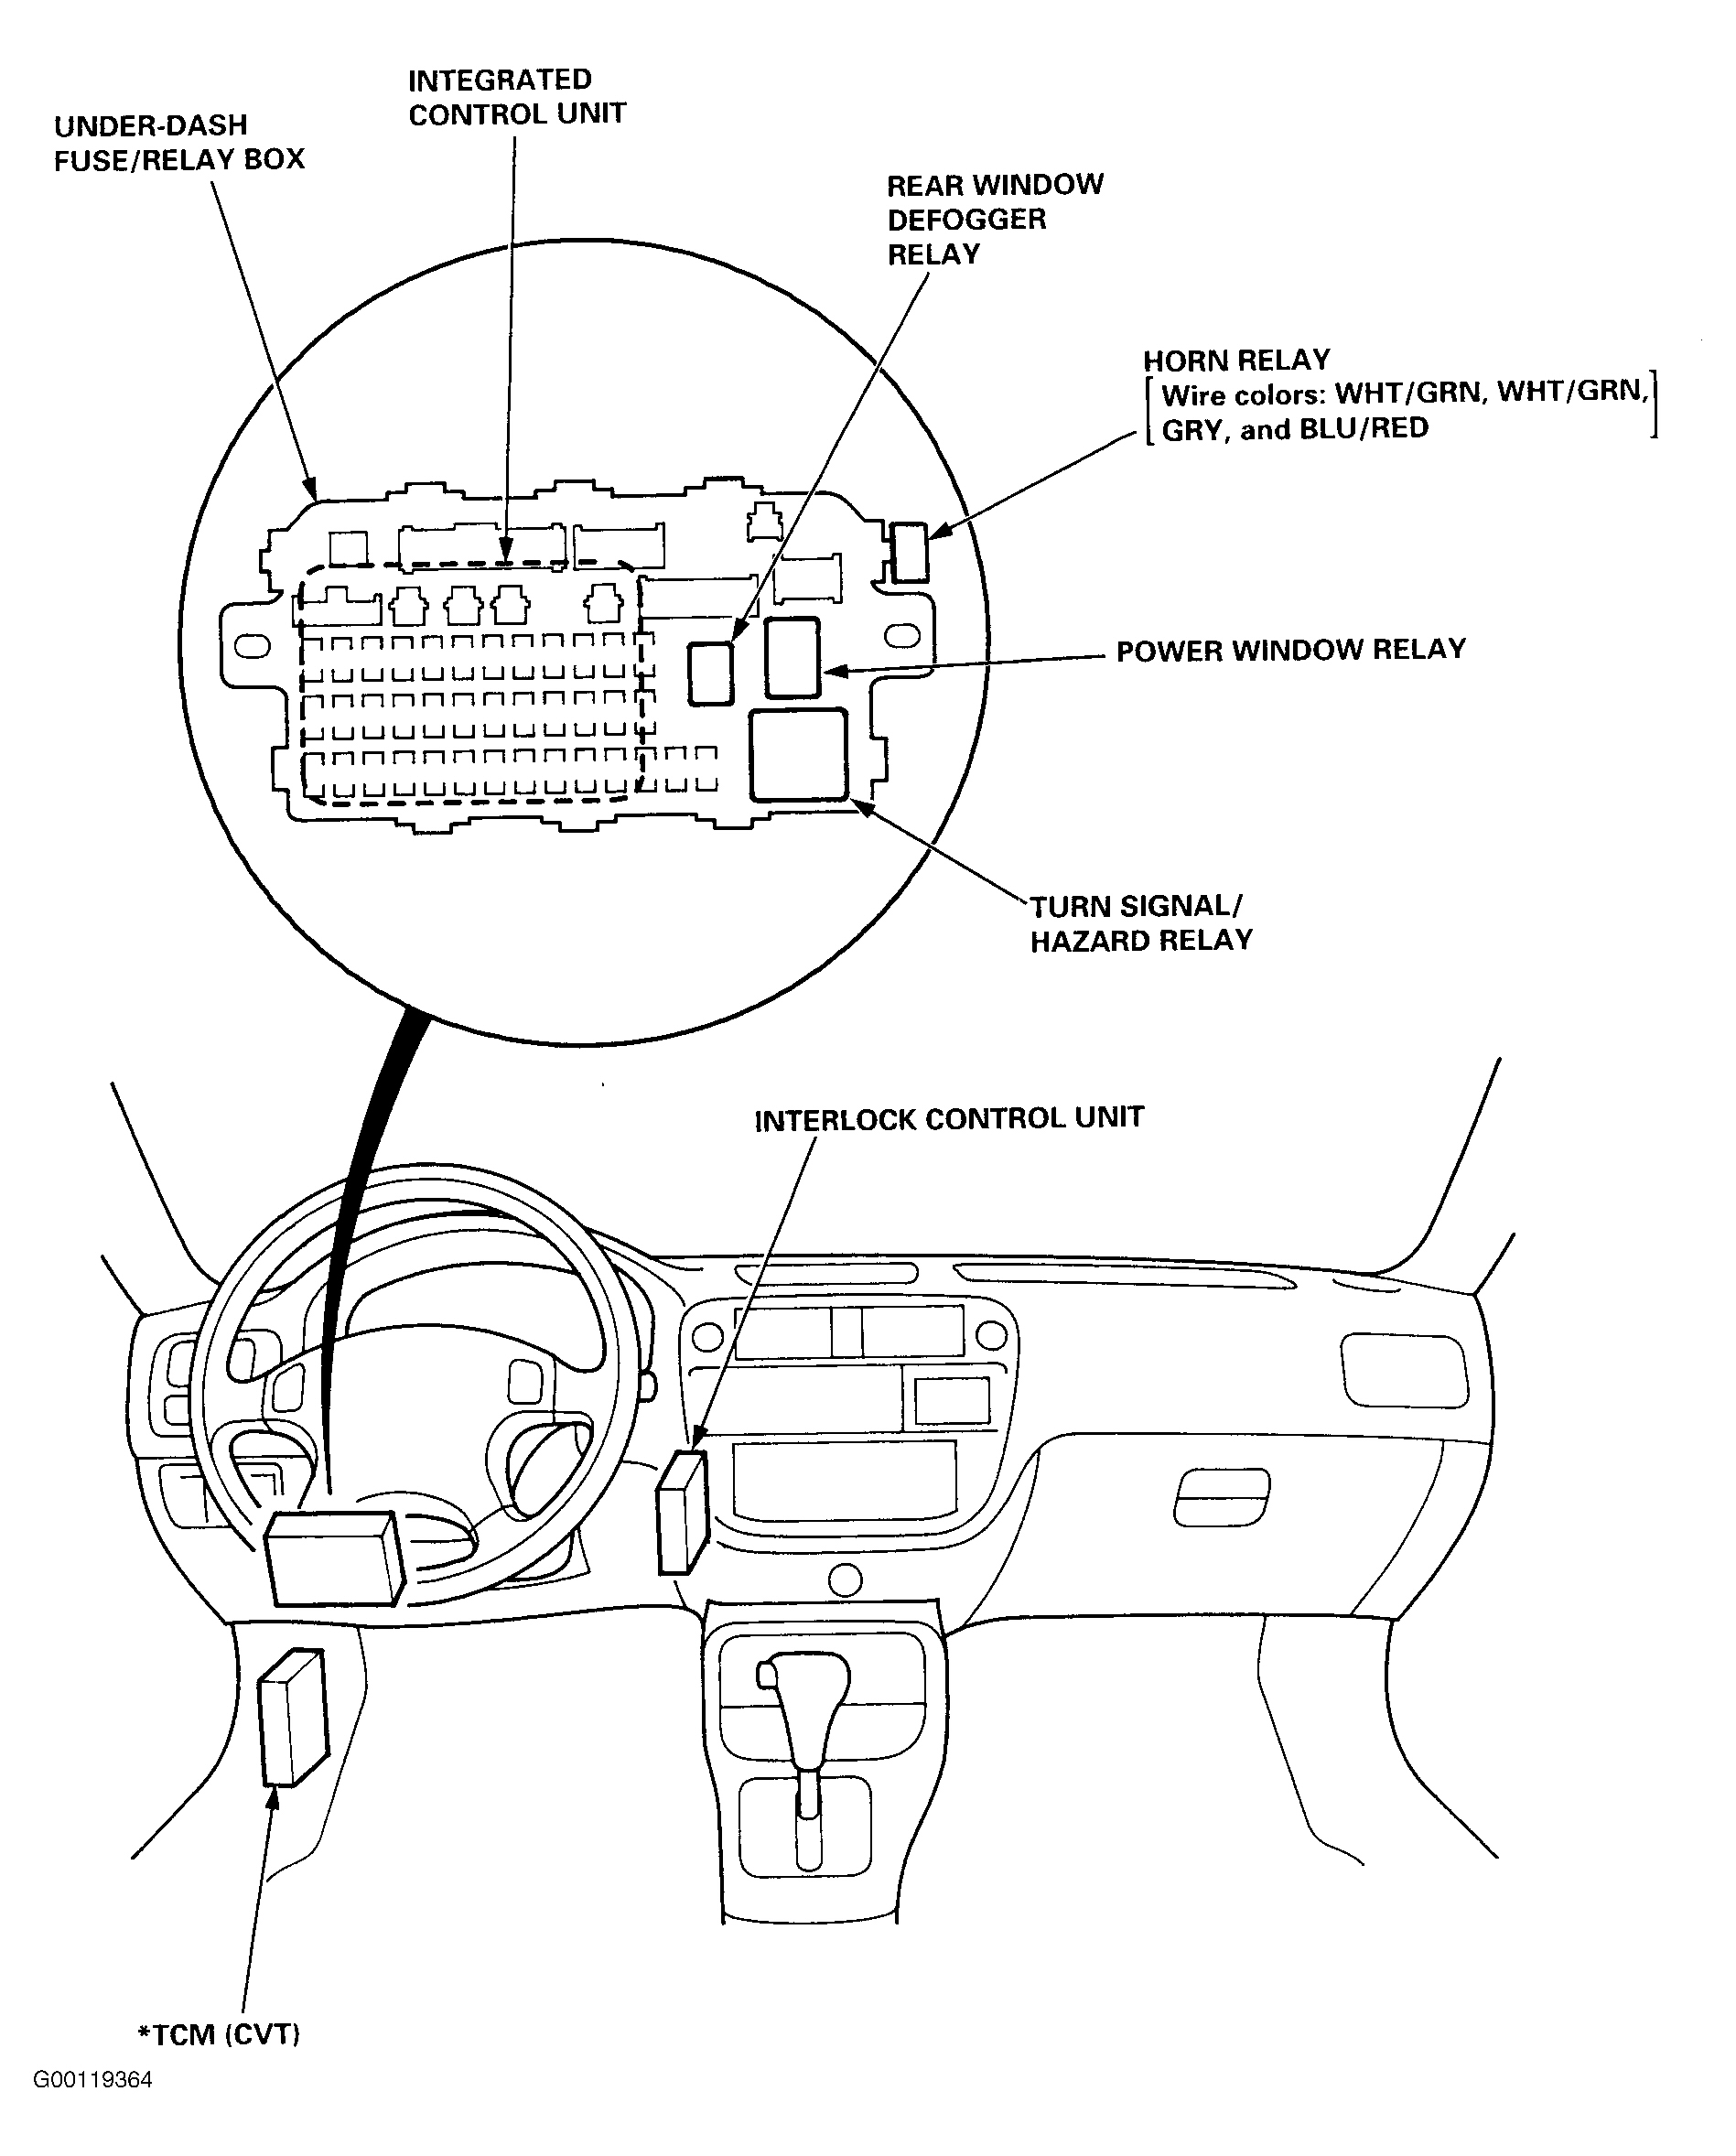 Honda Civic EX 1998 - Component Locations -  Locating Under-Dash Fuse/Relay Box (1996-97)